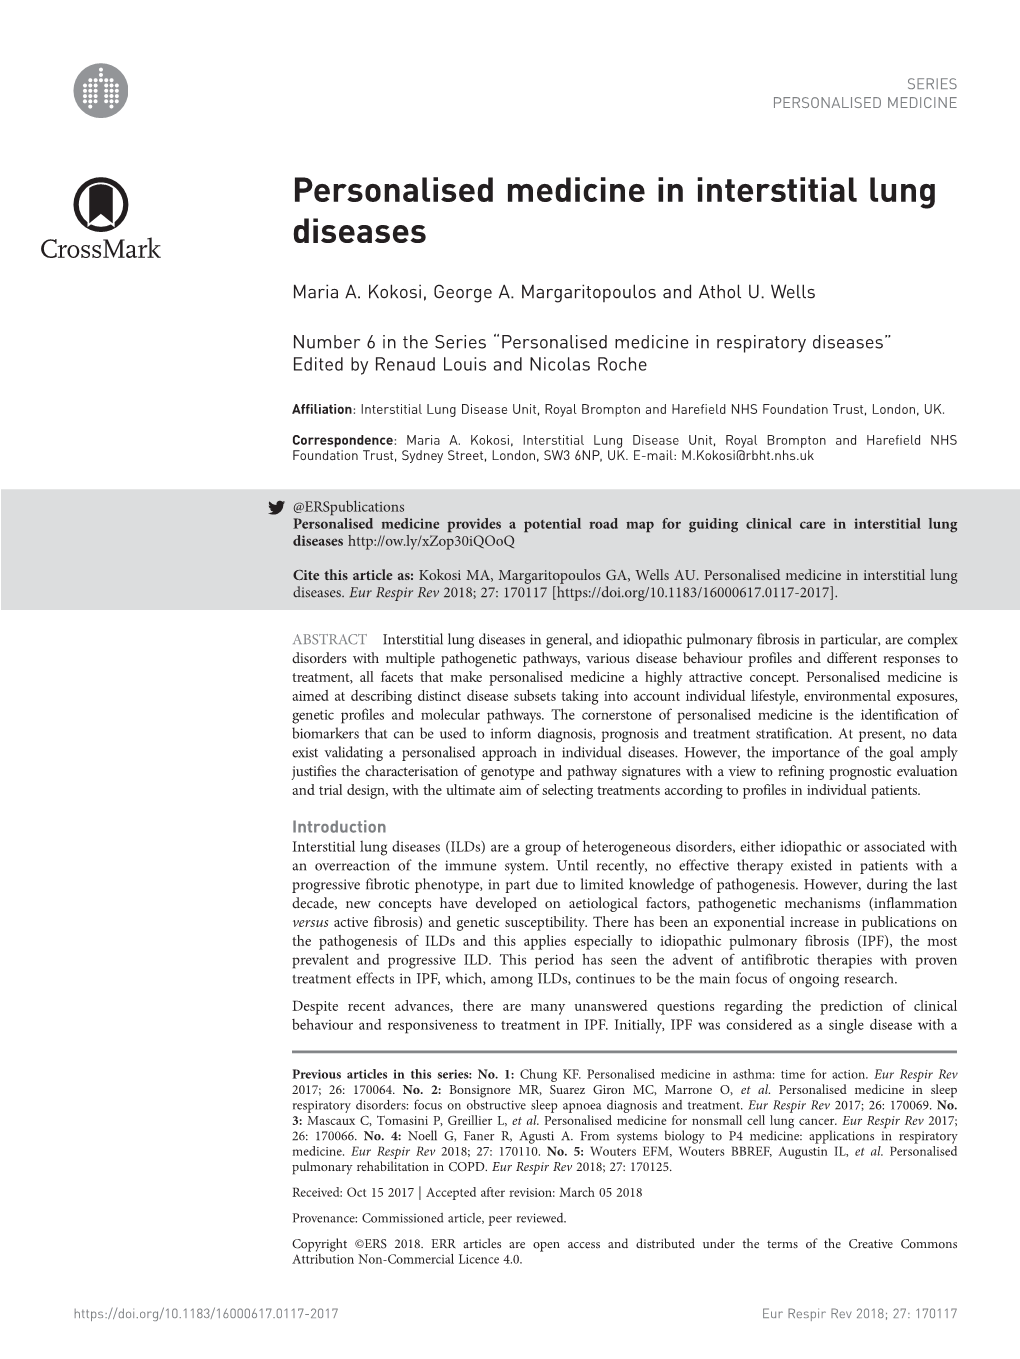 Personalised Medicine in Interstitial Lung Diseases